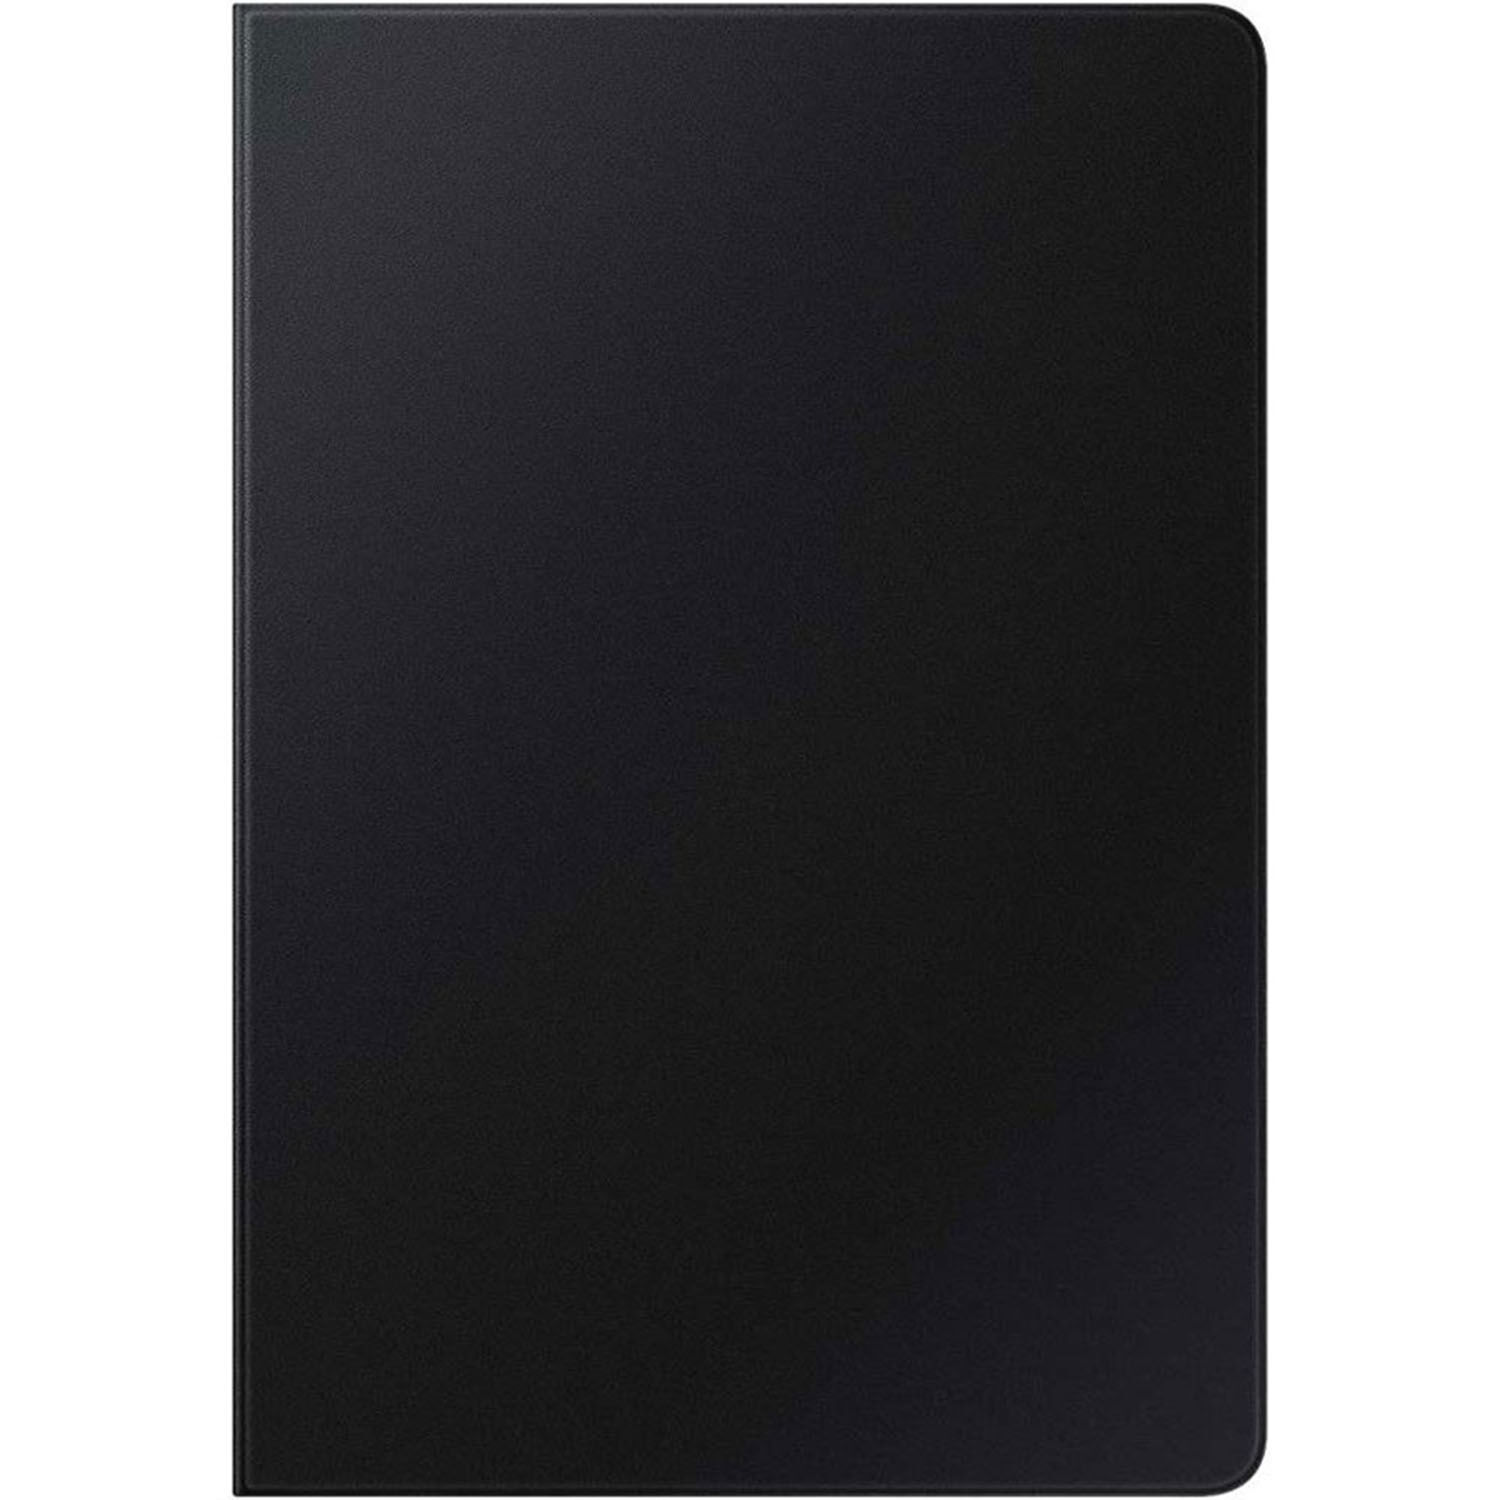 Samsung Coque Book pour le Samsung Galaxy Tab S7 - Noir